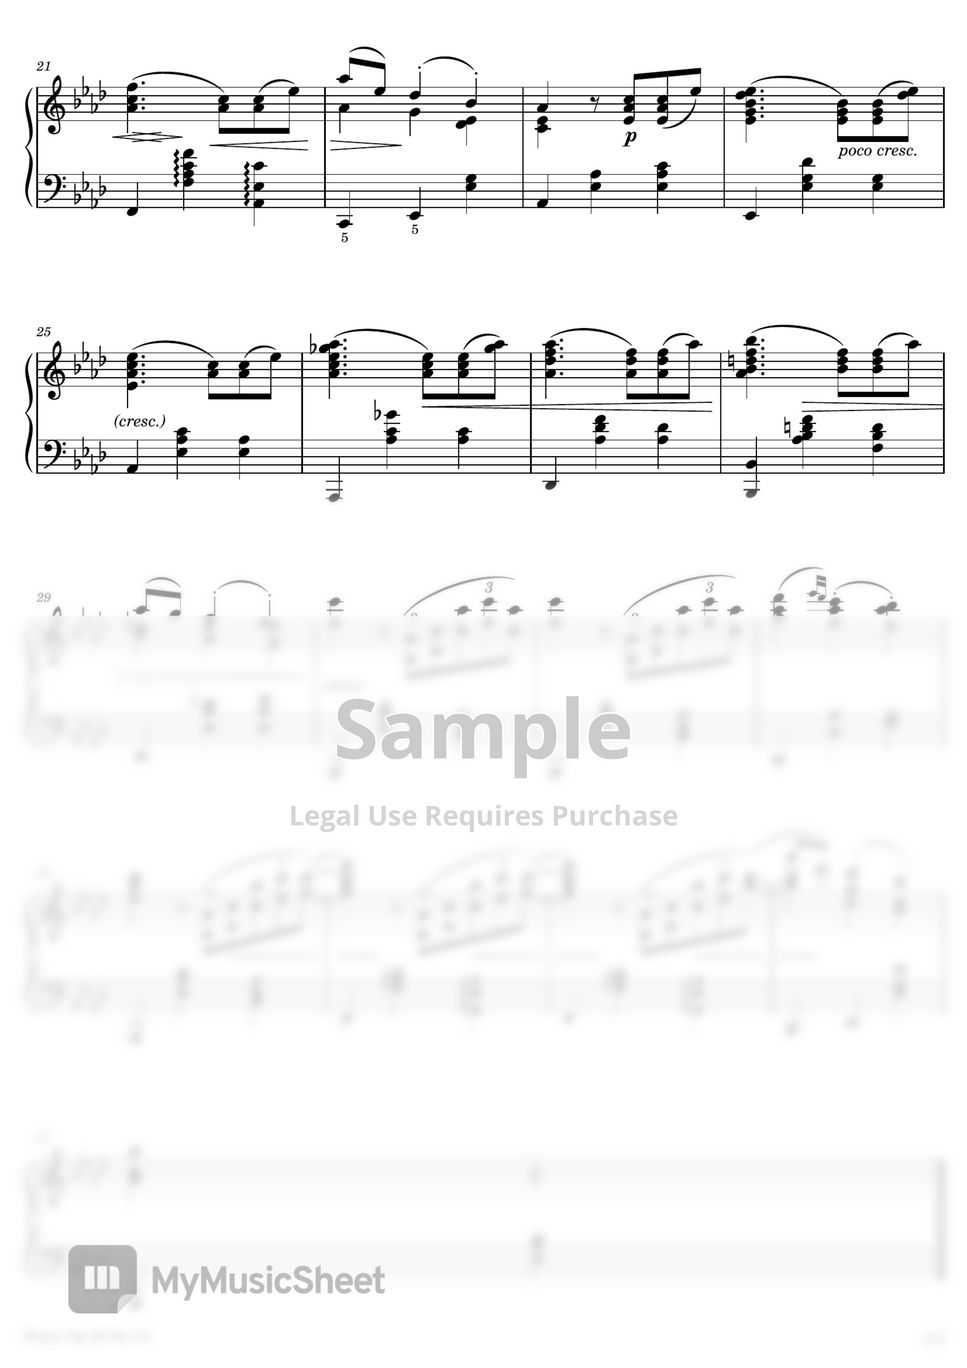 Johannes Brahms - Waltz in A♭ Major - Op.39 No.15 (Original - For Piano Solo) by poon